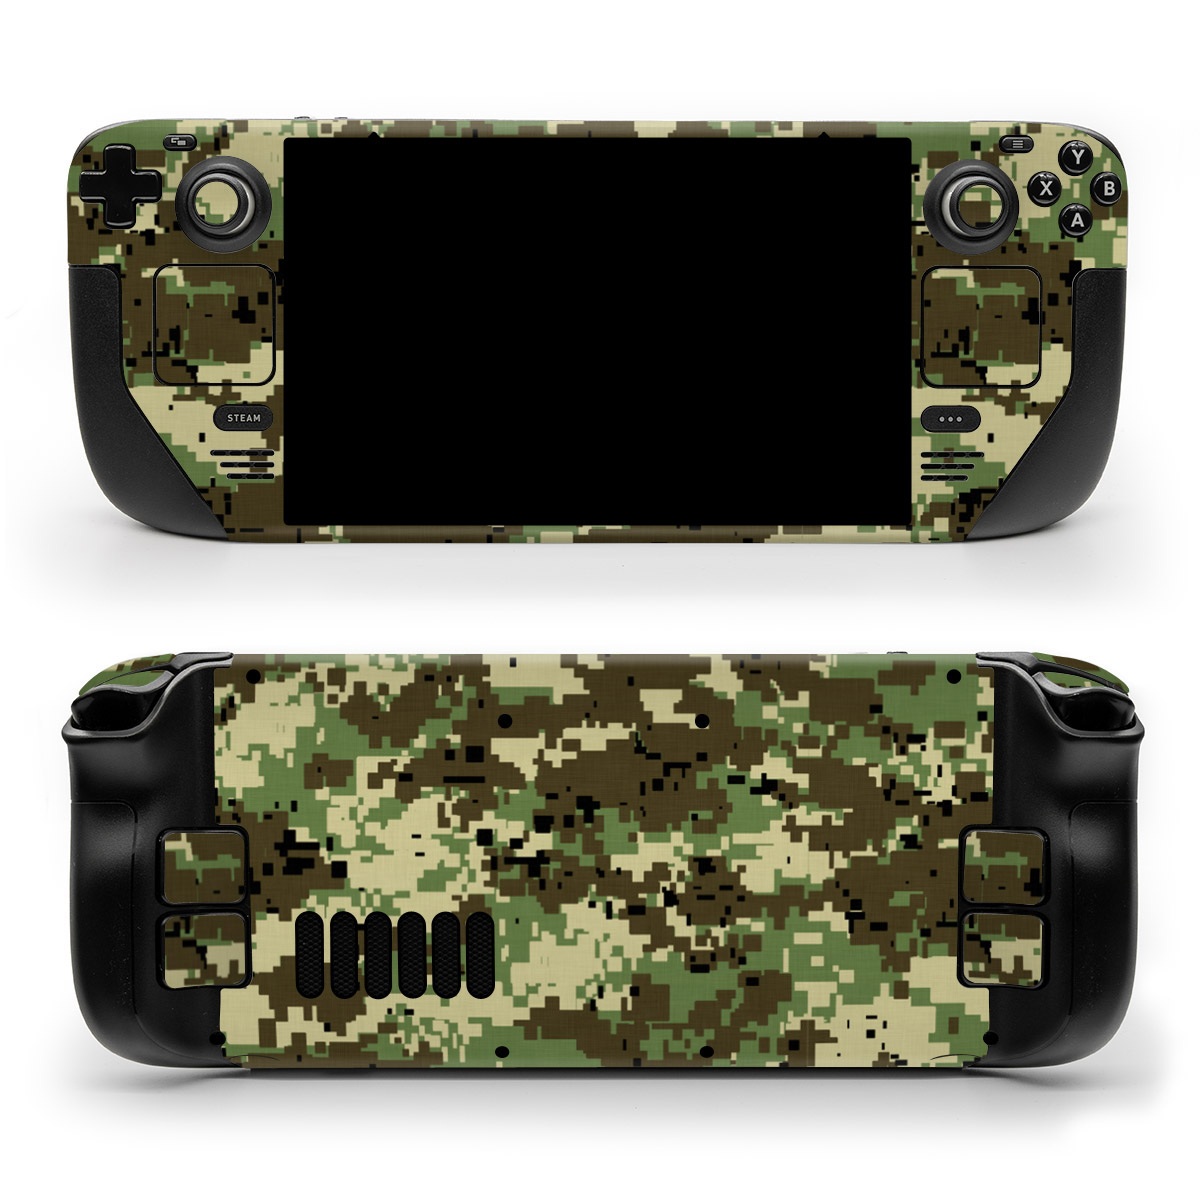 Valve Steam Deck Skin design of Military camouflage, Pattern, Camouflage, Green, Uniform, Clothing, Design, Military uniform, with black, gray, green colors